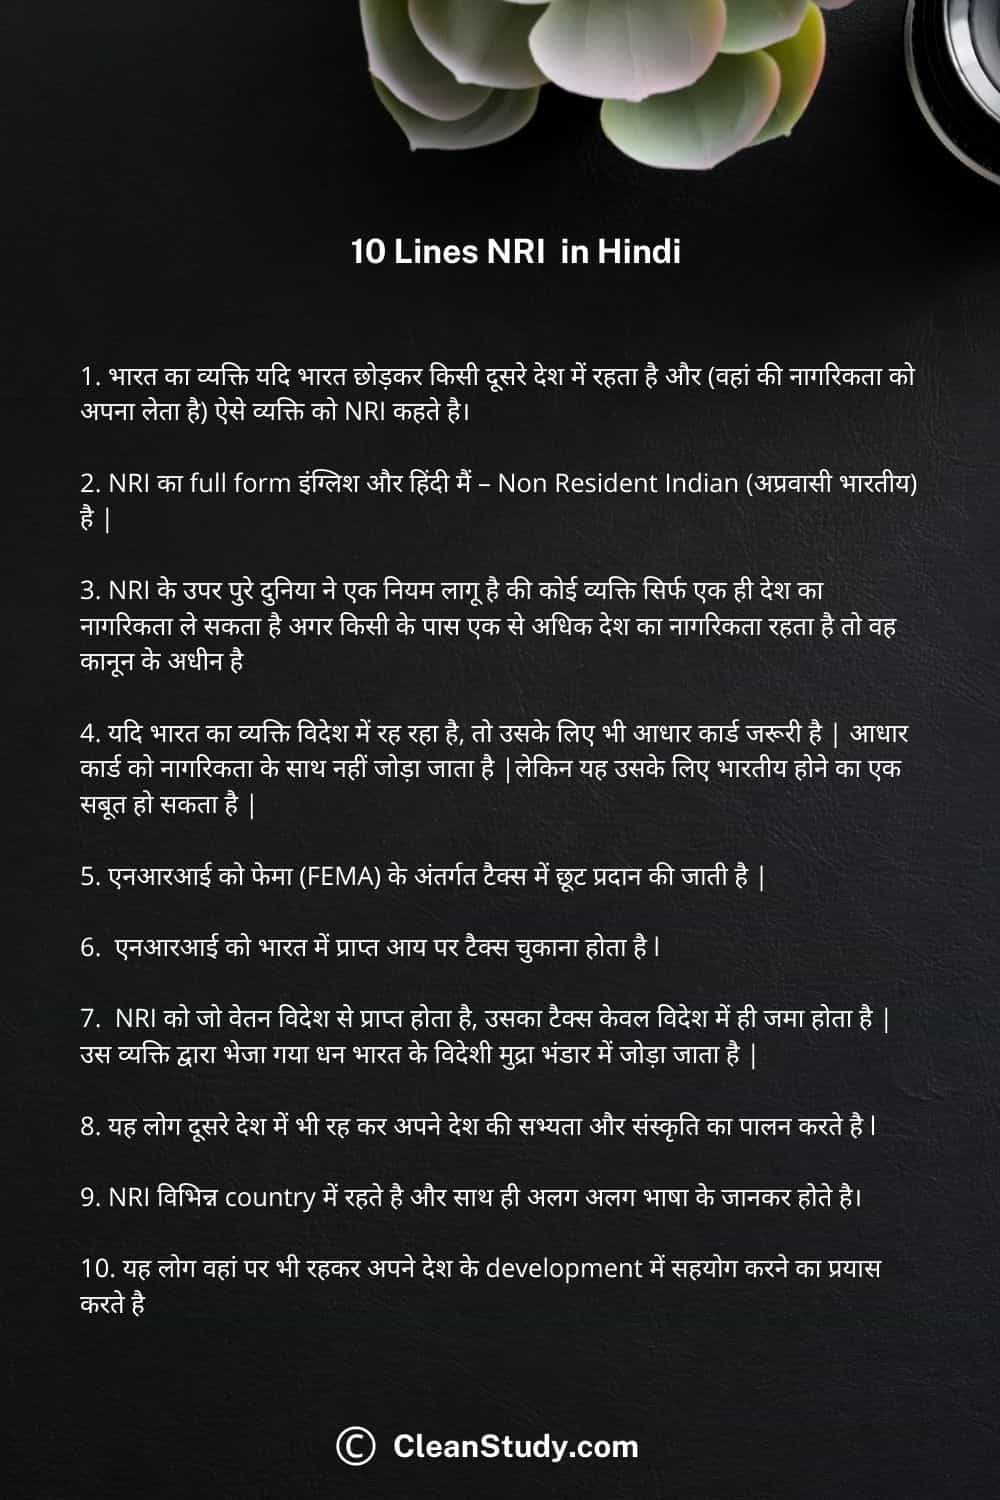 10 Lines on NRI in Hindi 